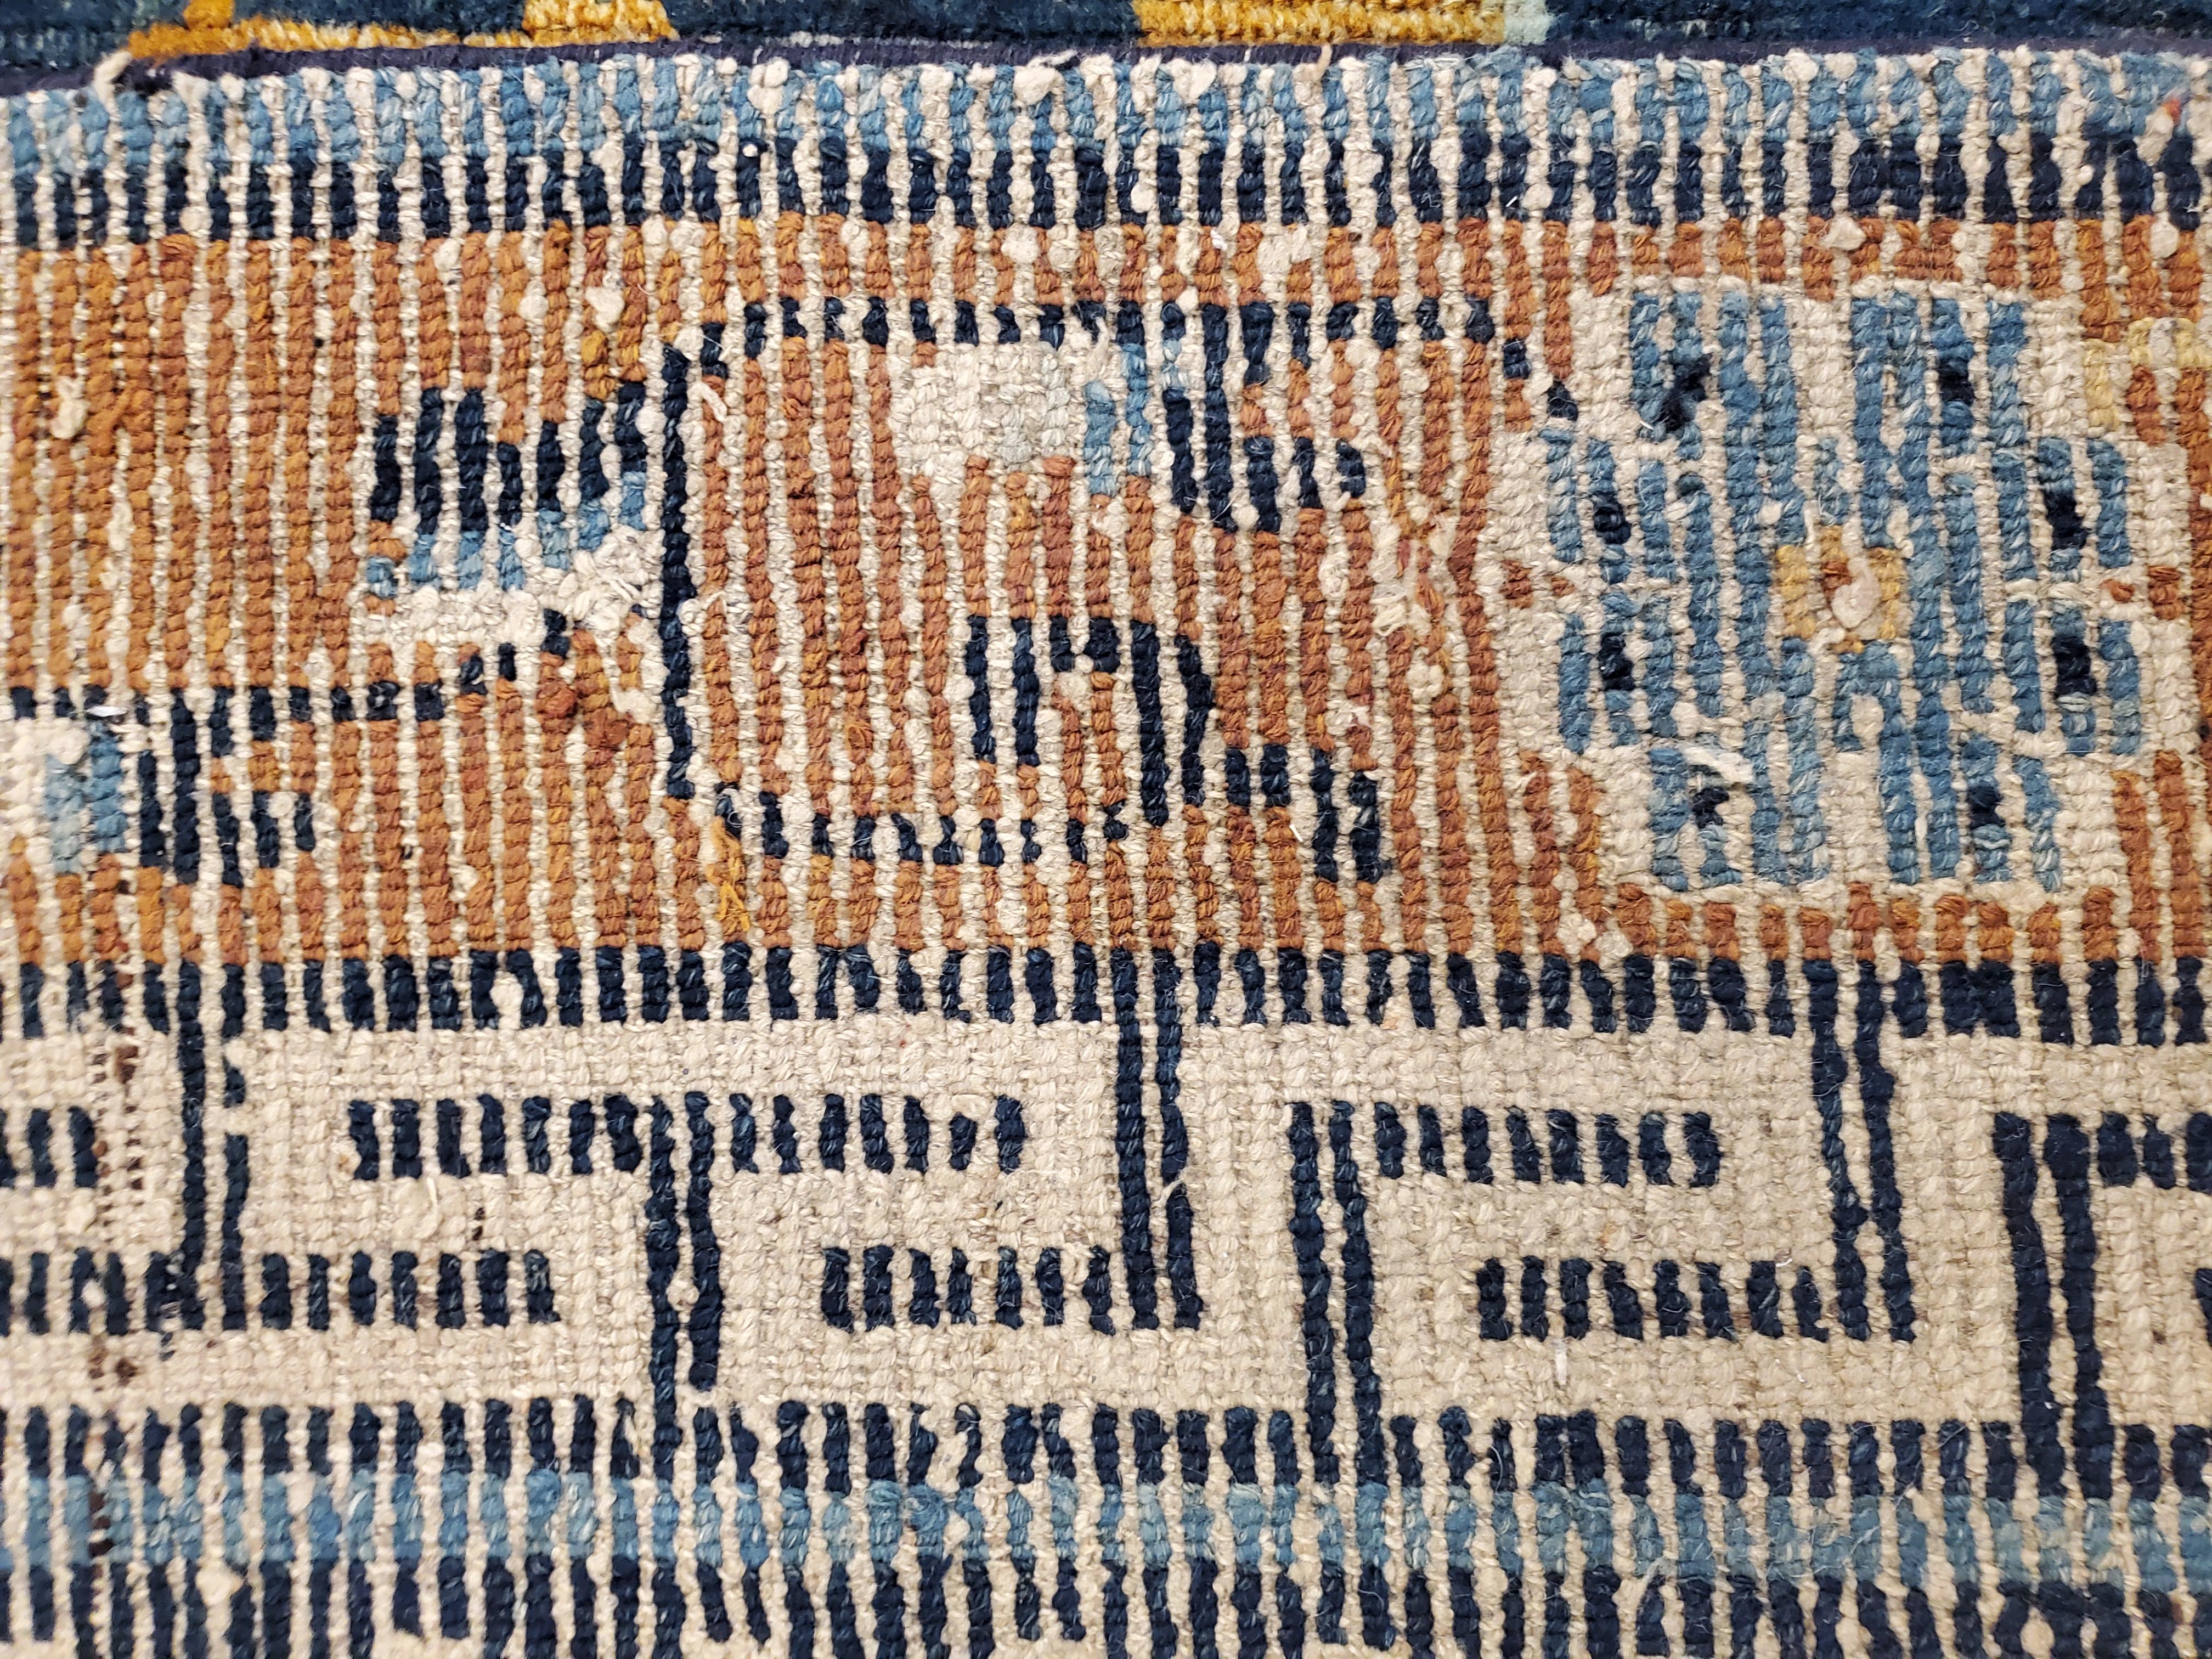 Antique Tibetan Carpet, Circa 1880 Handmade Oriental Rug, Blue, Gold, Tan, Cream 4